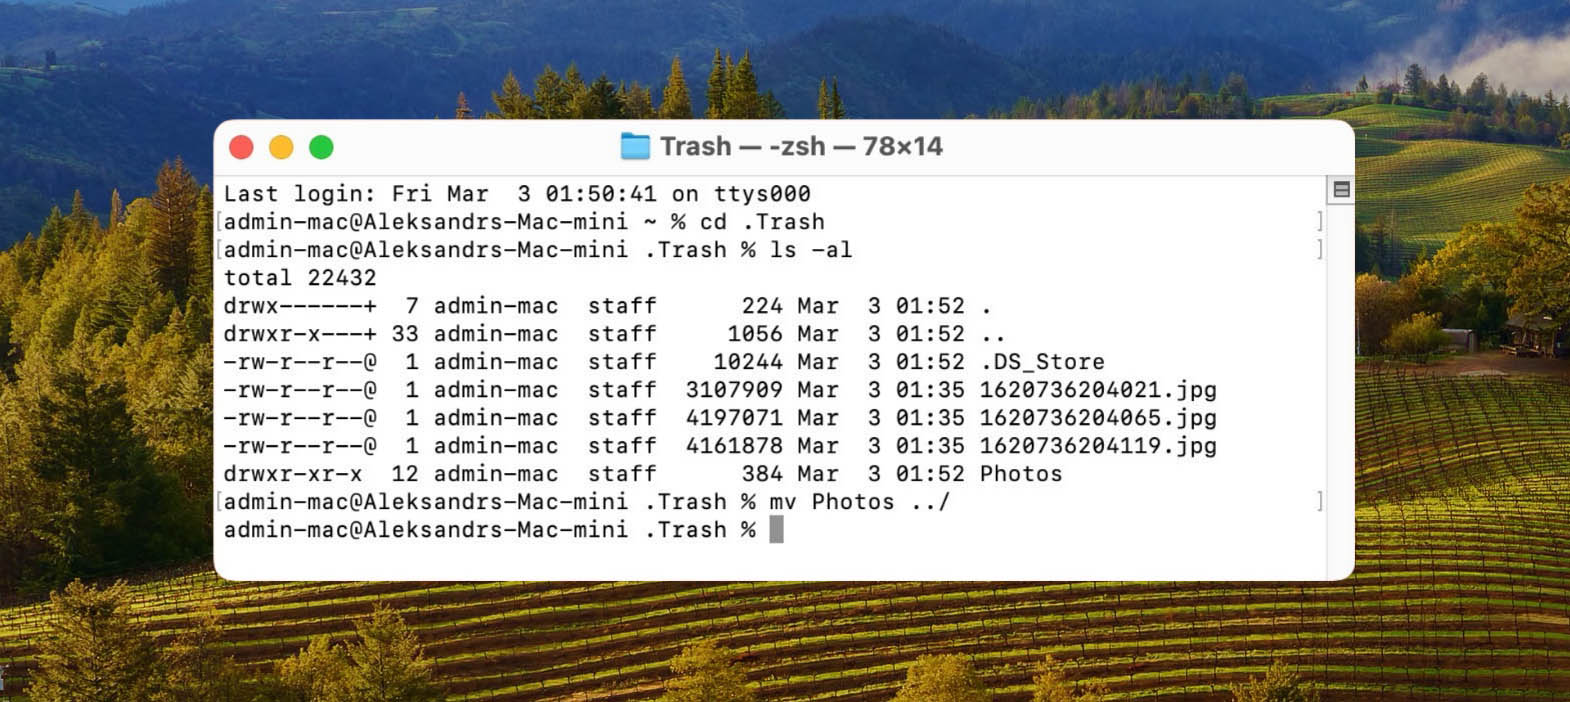 view trash folder on mac in terminal